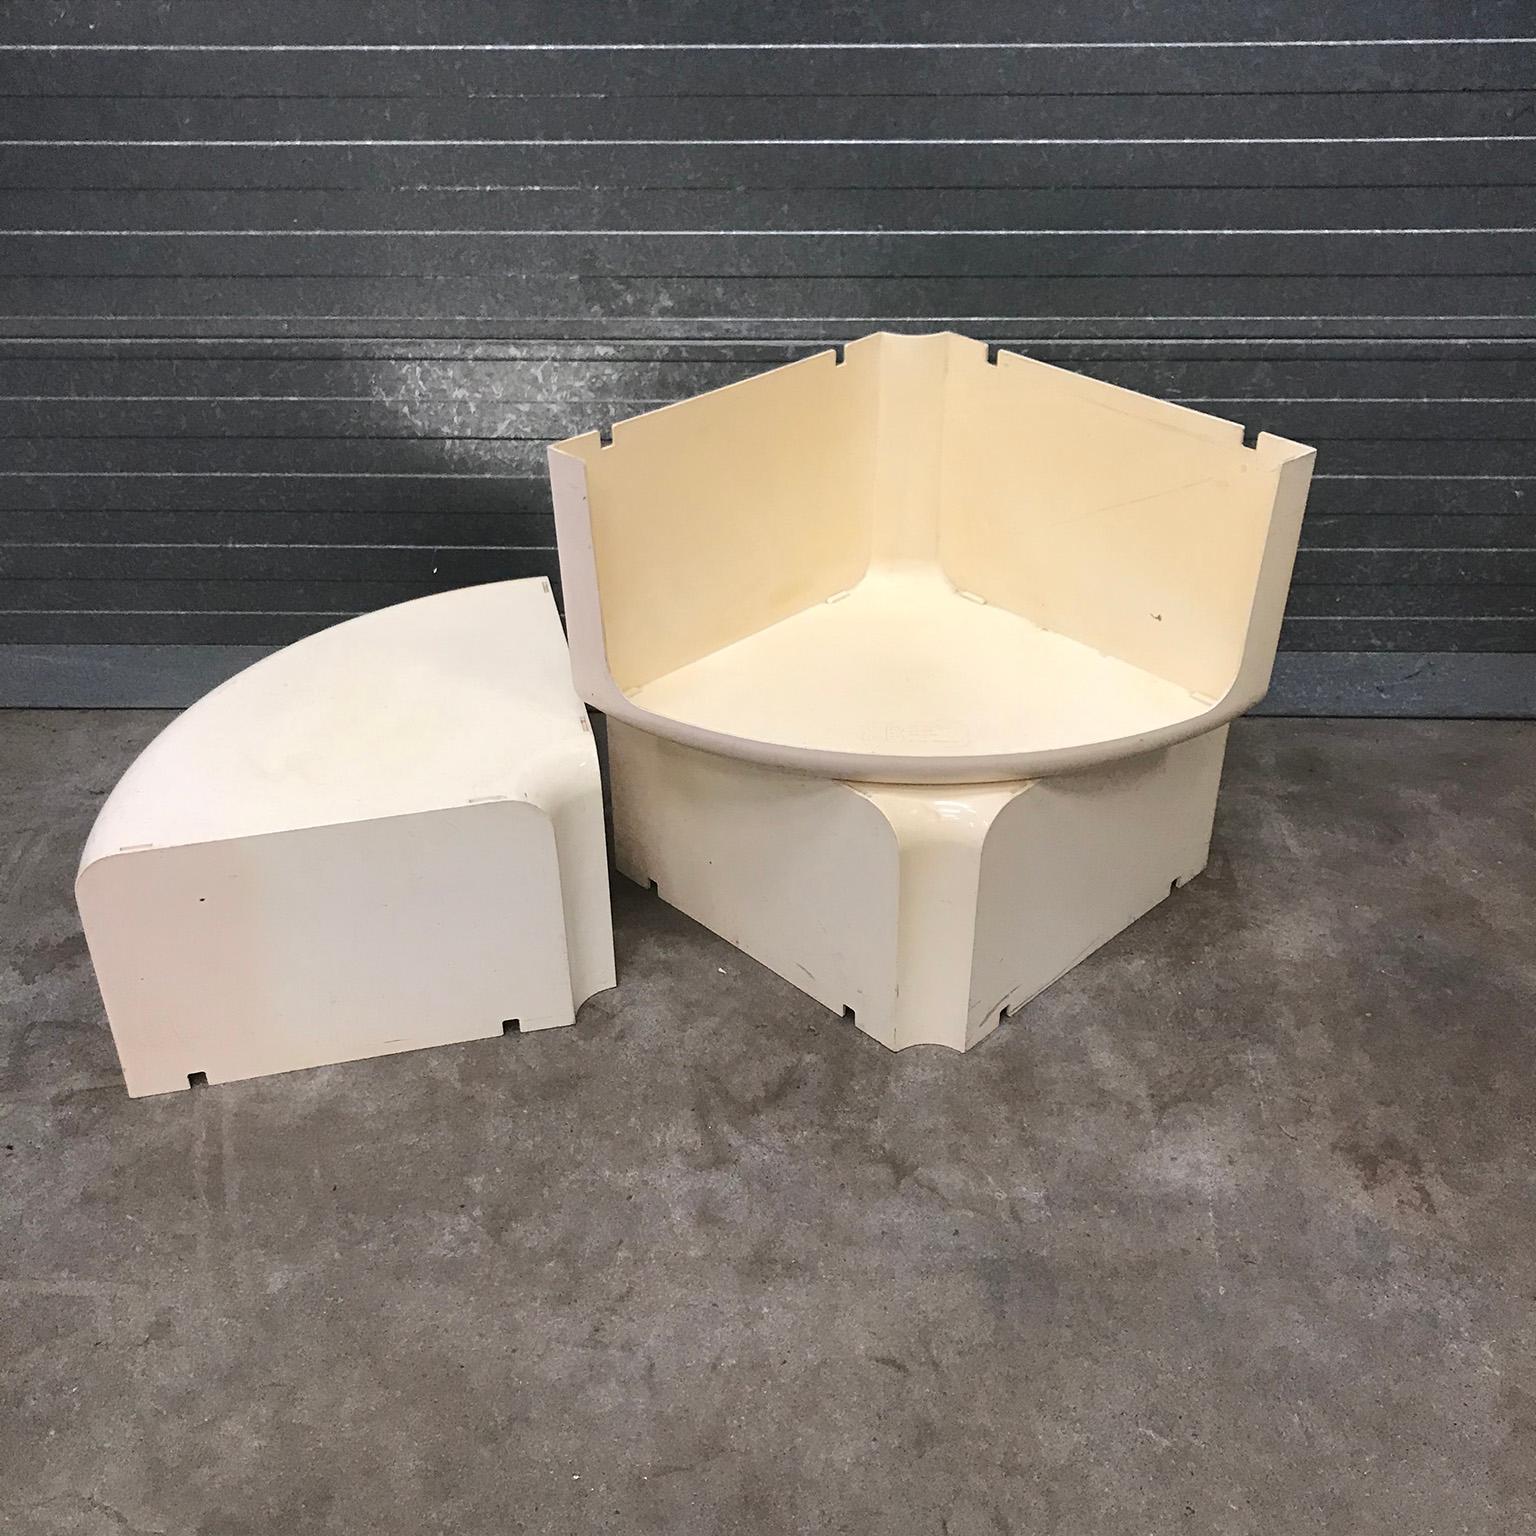 Three Half Round Plastic Side Tables in Off-White, circa 1970 For Sale 11